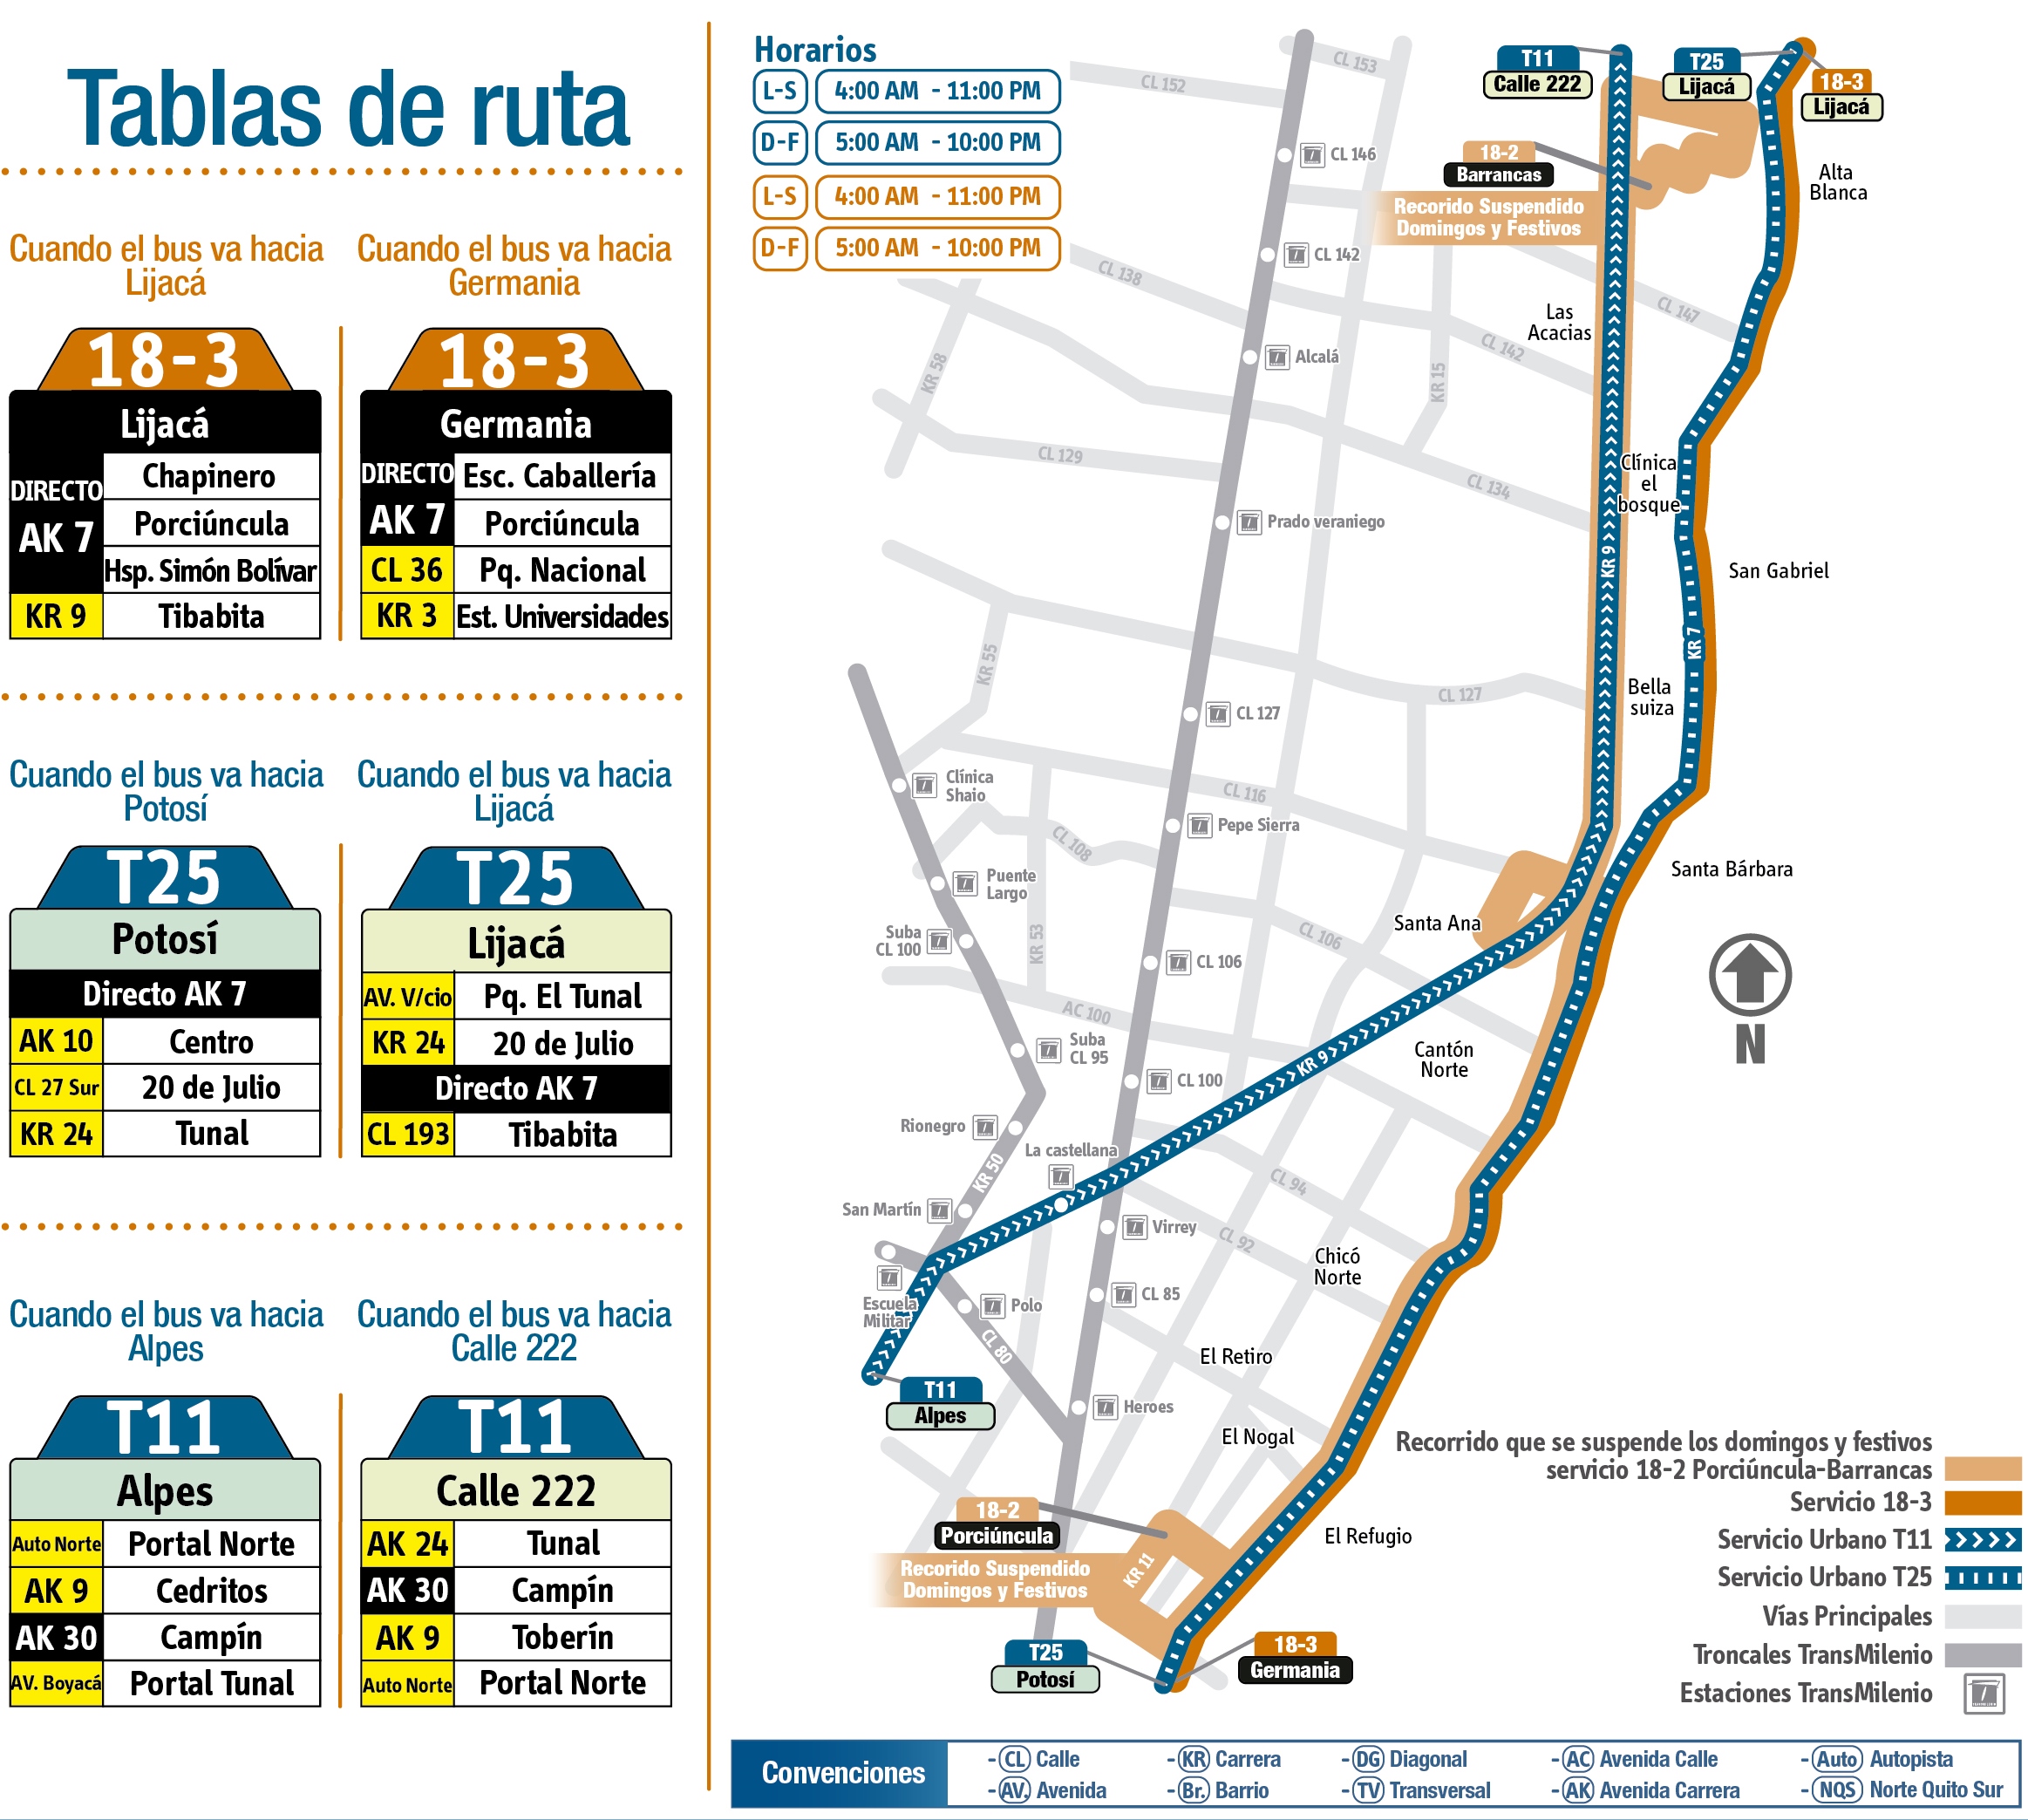 Cambio operacional: ruta complementaria 18-2 Barrancas - Porciúncula